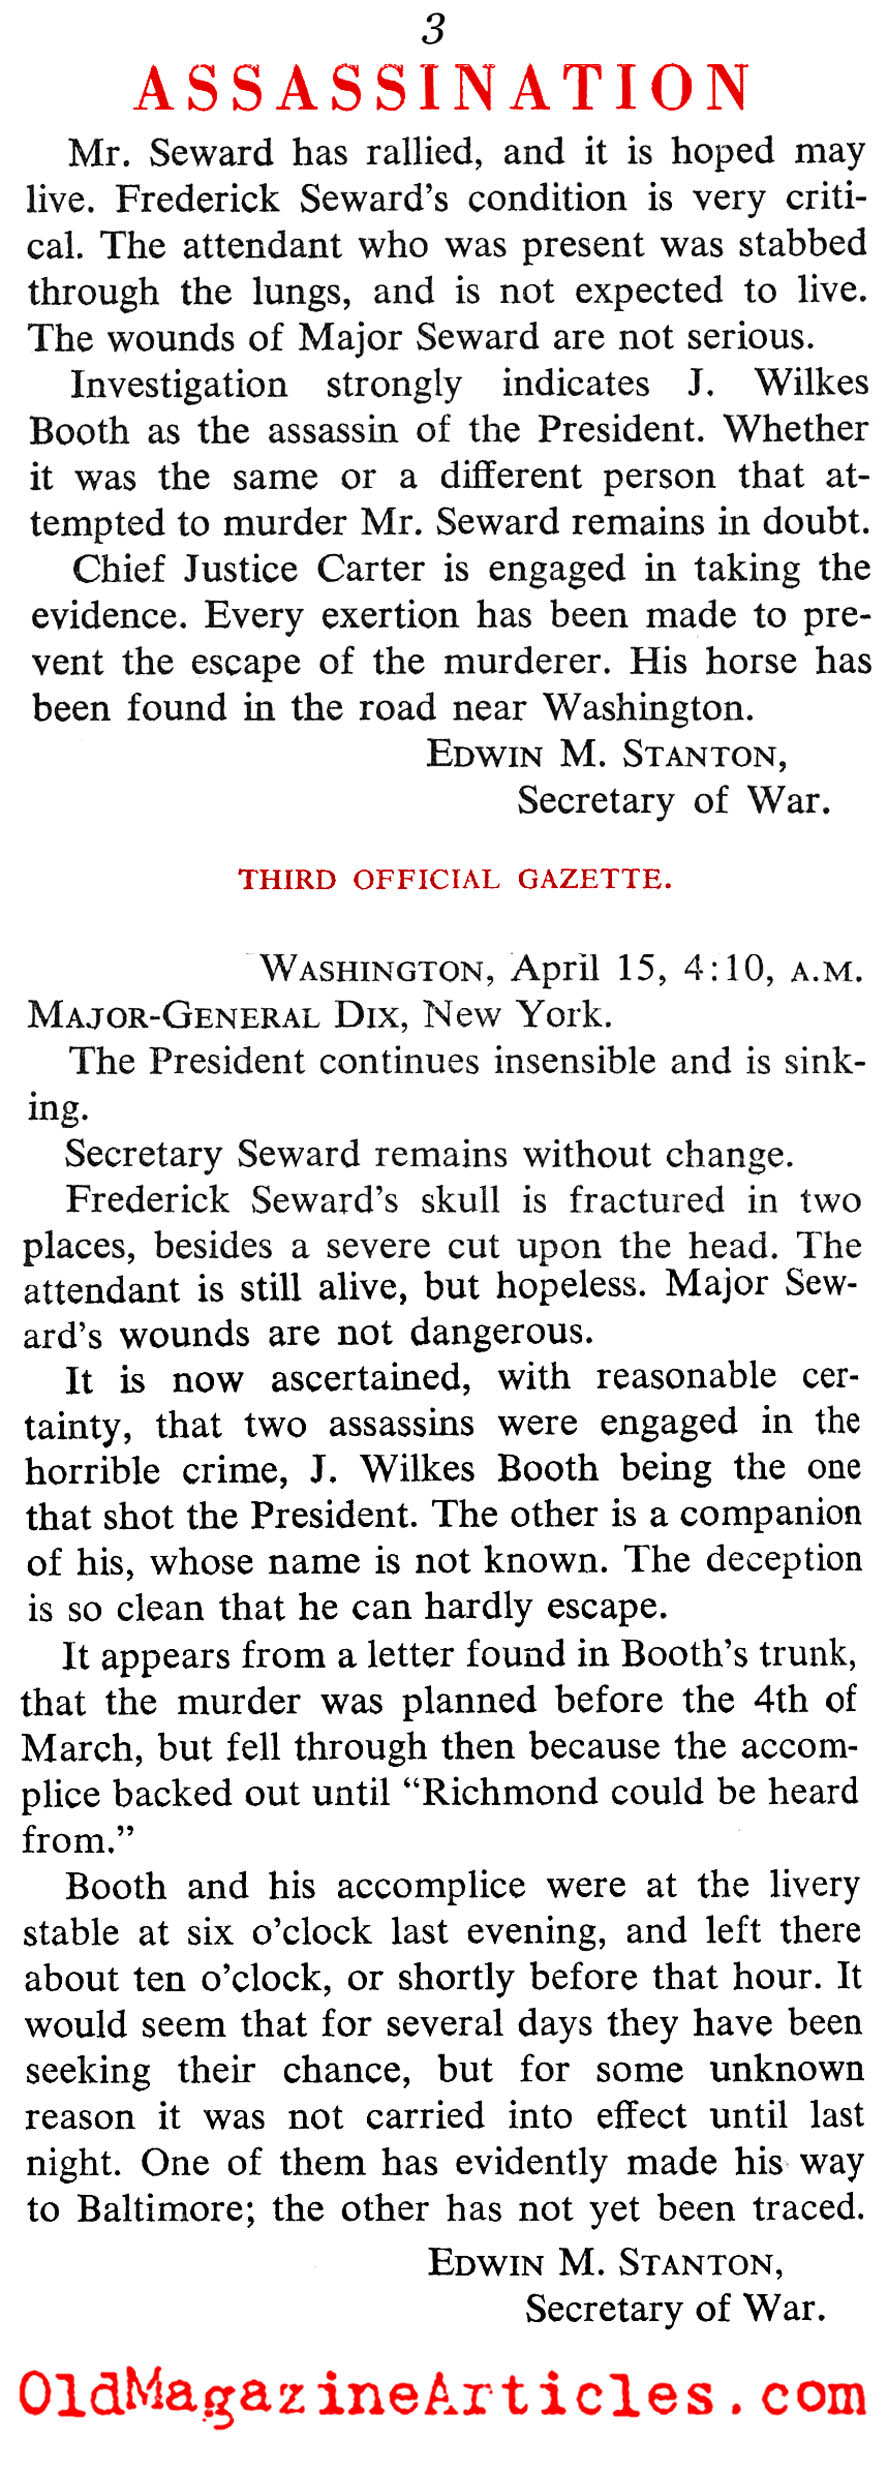 Snapshots of the Assassination (Saturday Evening Post, 1865)